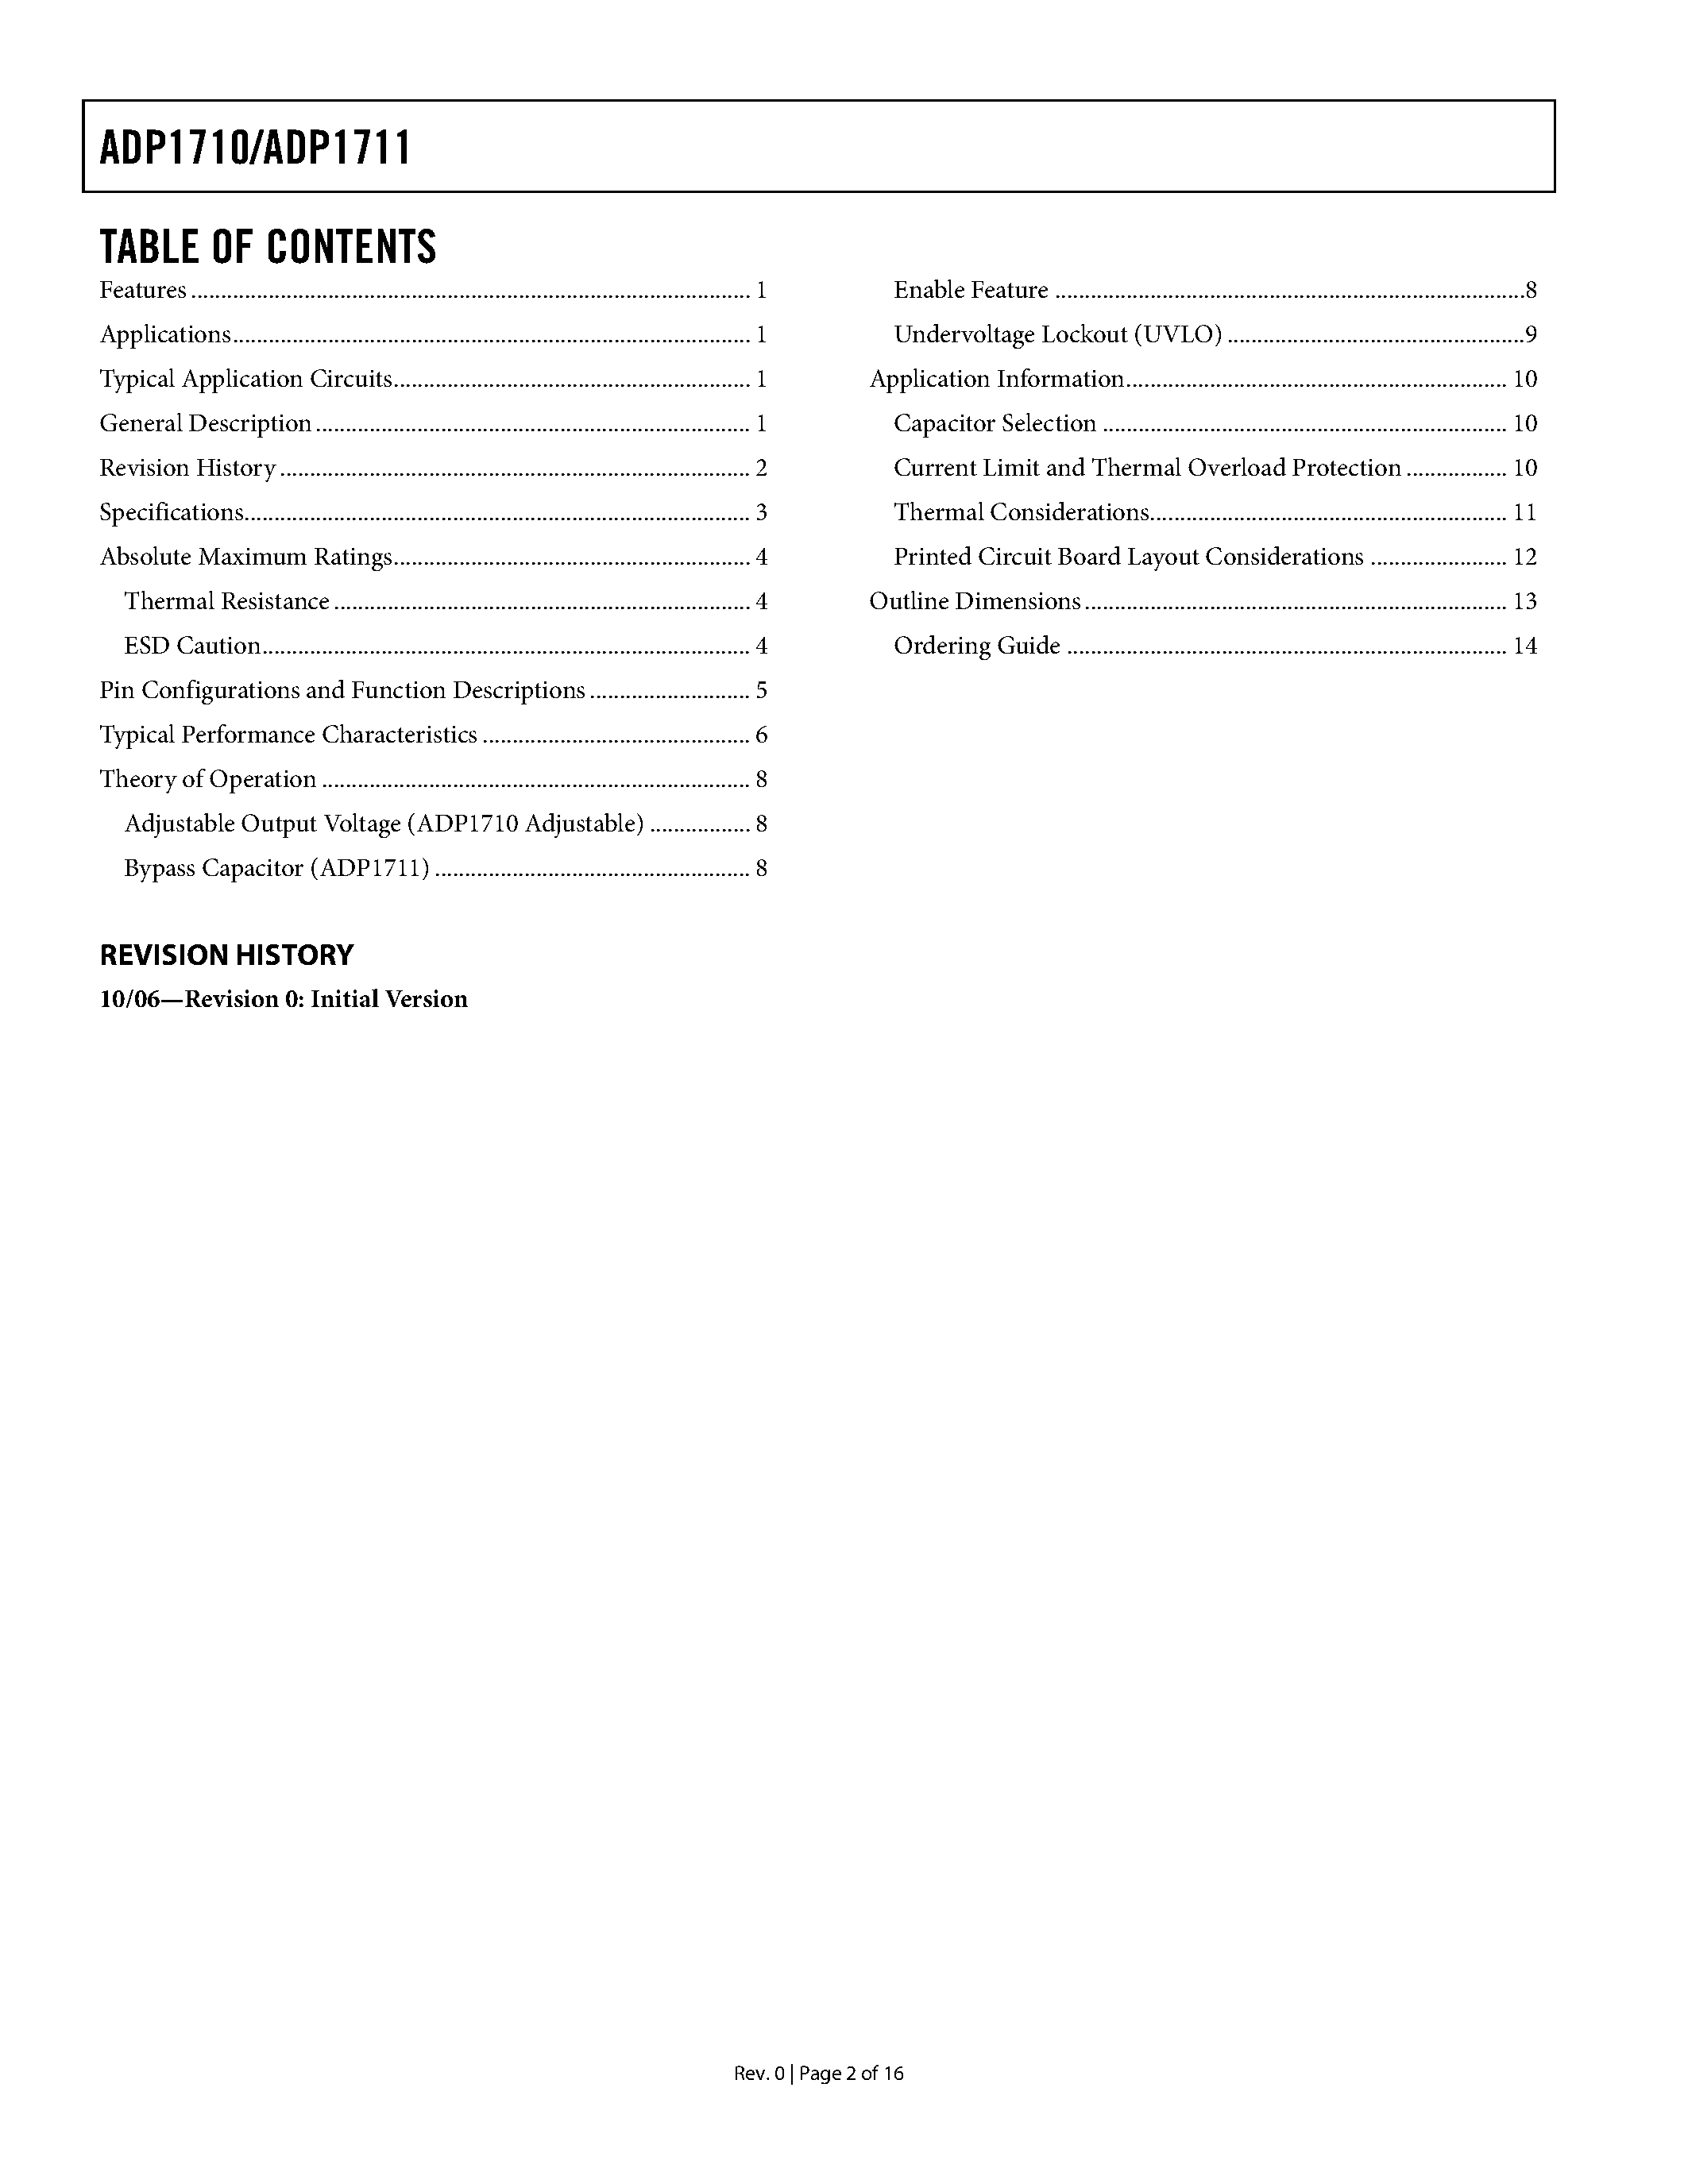 Datasheet ADP1710 - (ADP1710 / ADP1711) CMOS Linear Regulator page 2